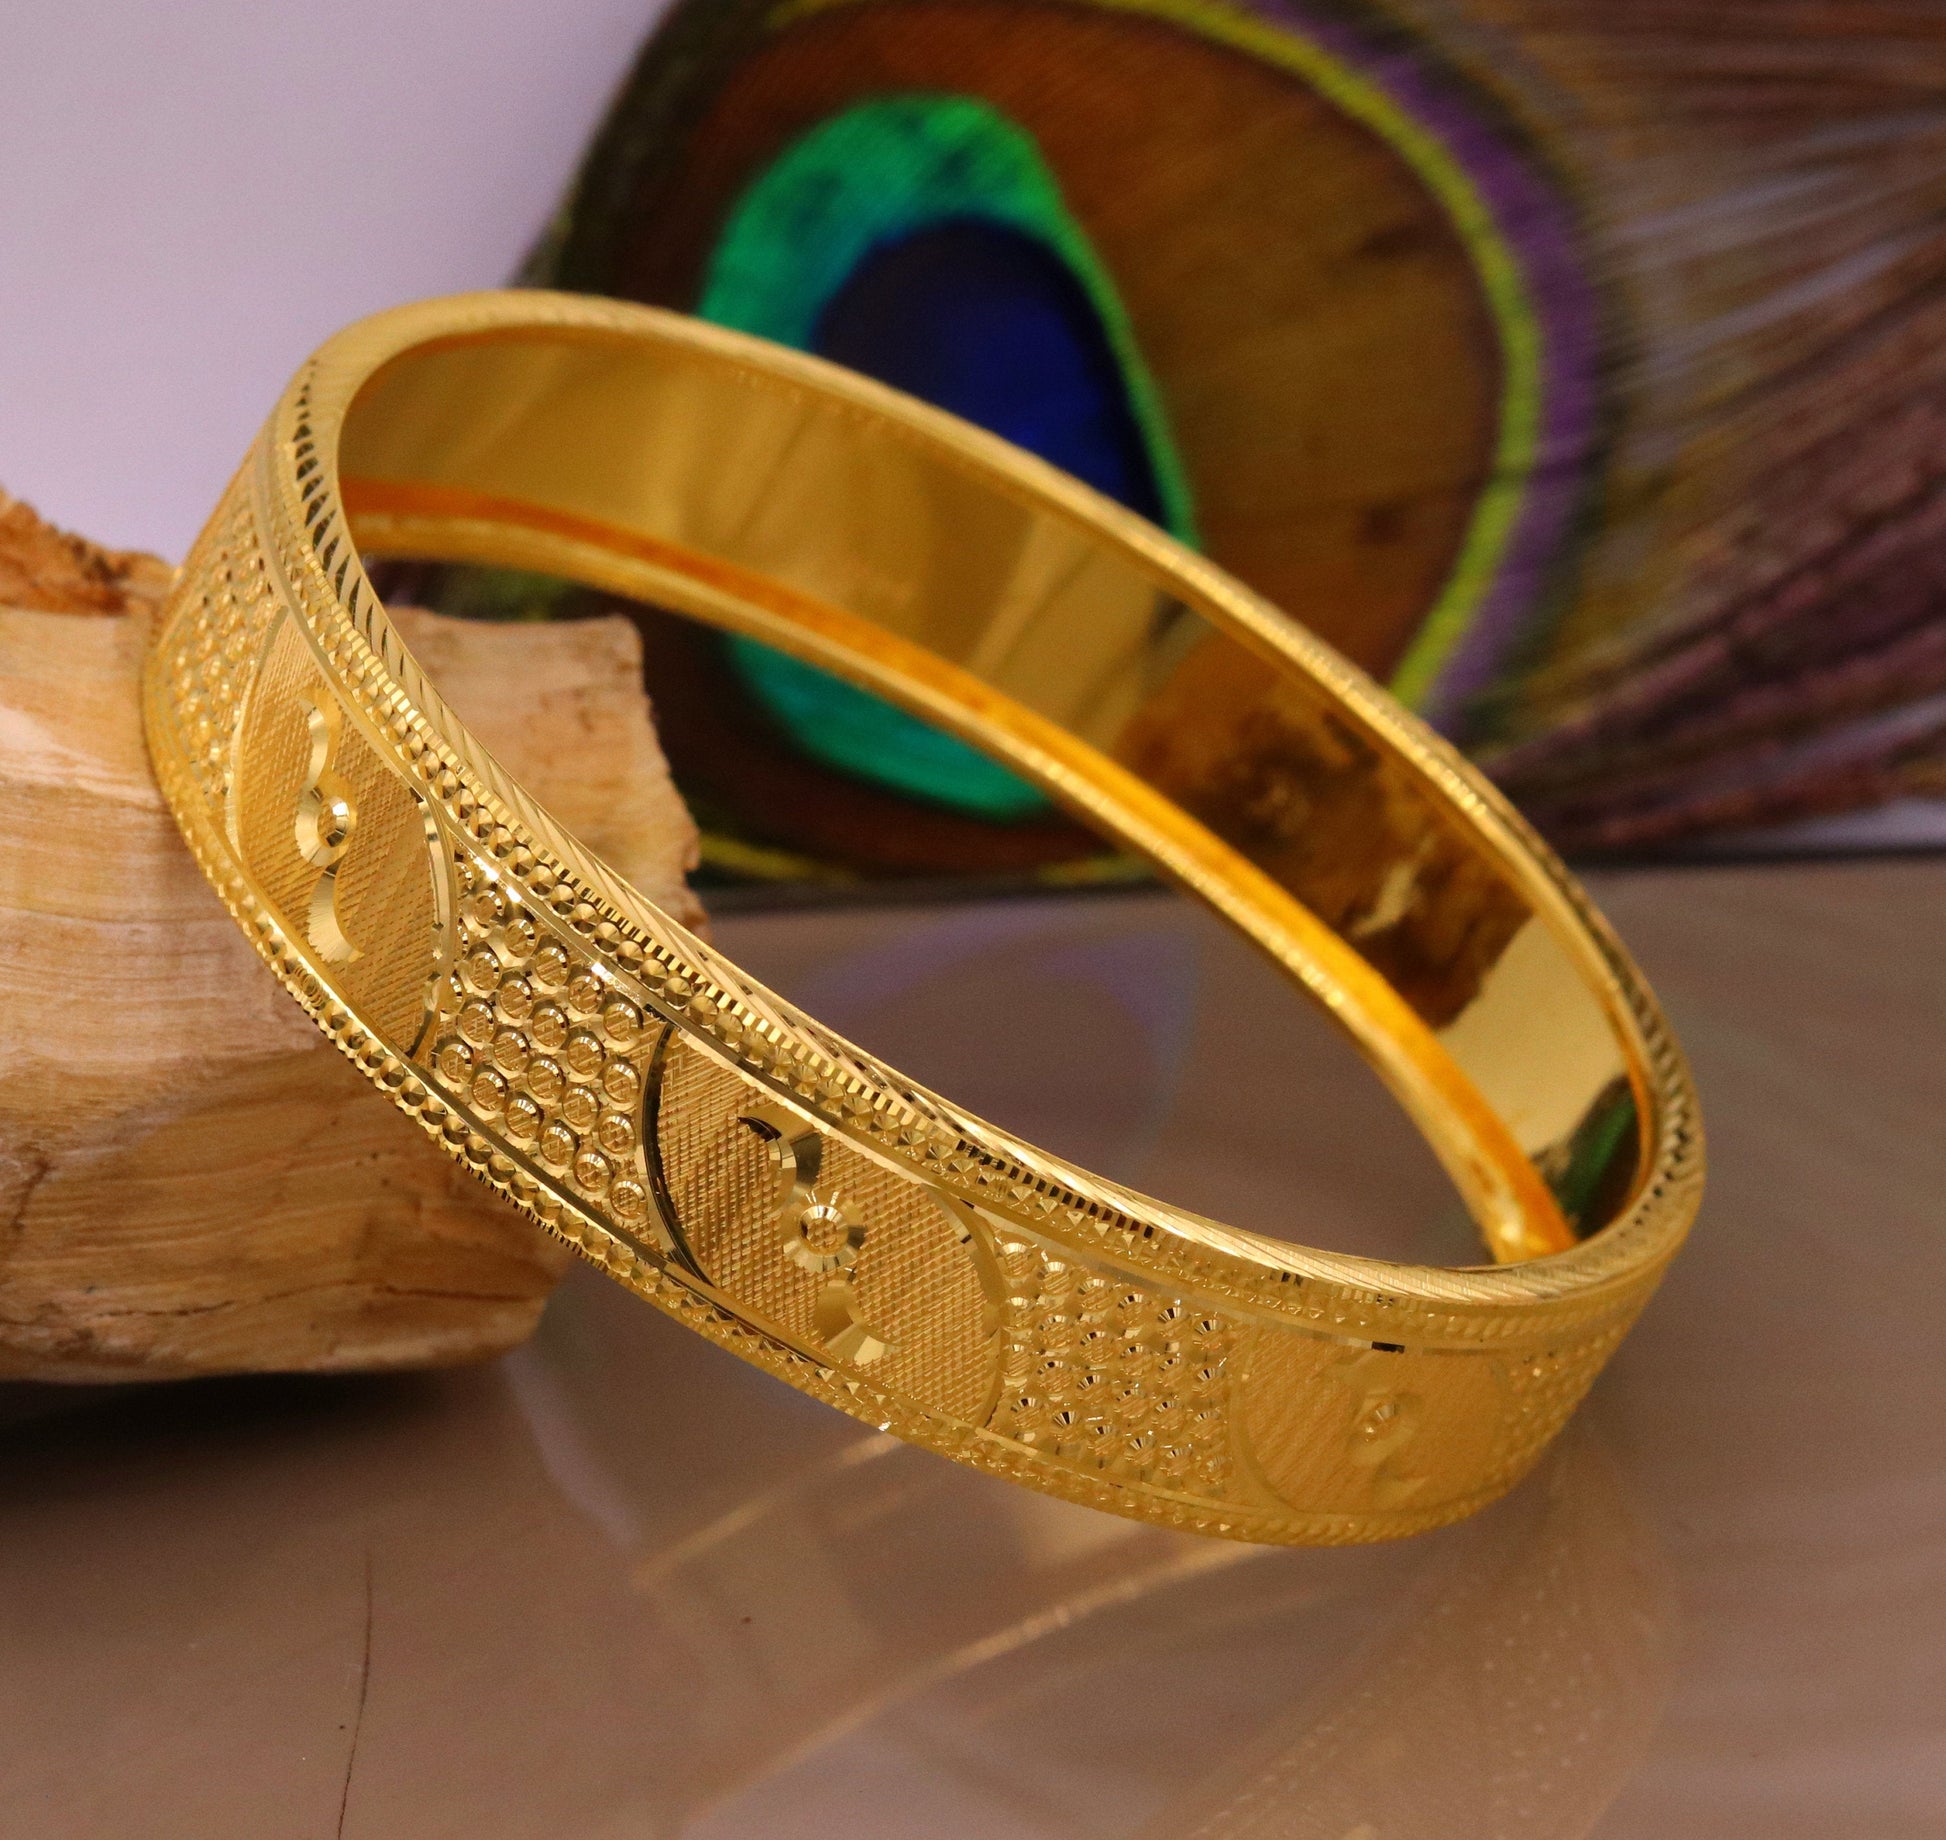 Certified 22kt yellow gold handmade solid bangle bracelet kada jewelry fabulous diamond cut designer jewelry for women's ba46 - TRIBAL ORNAMENTS